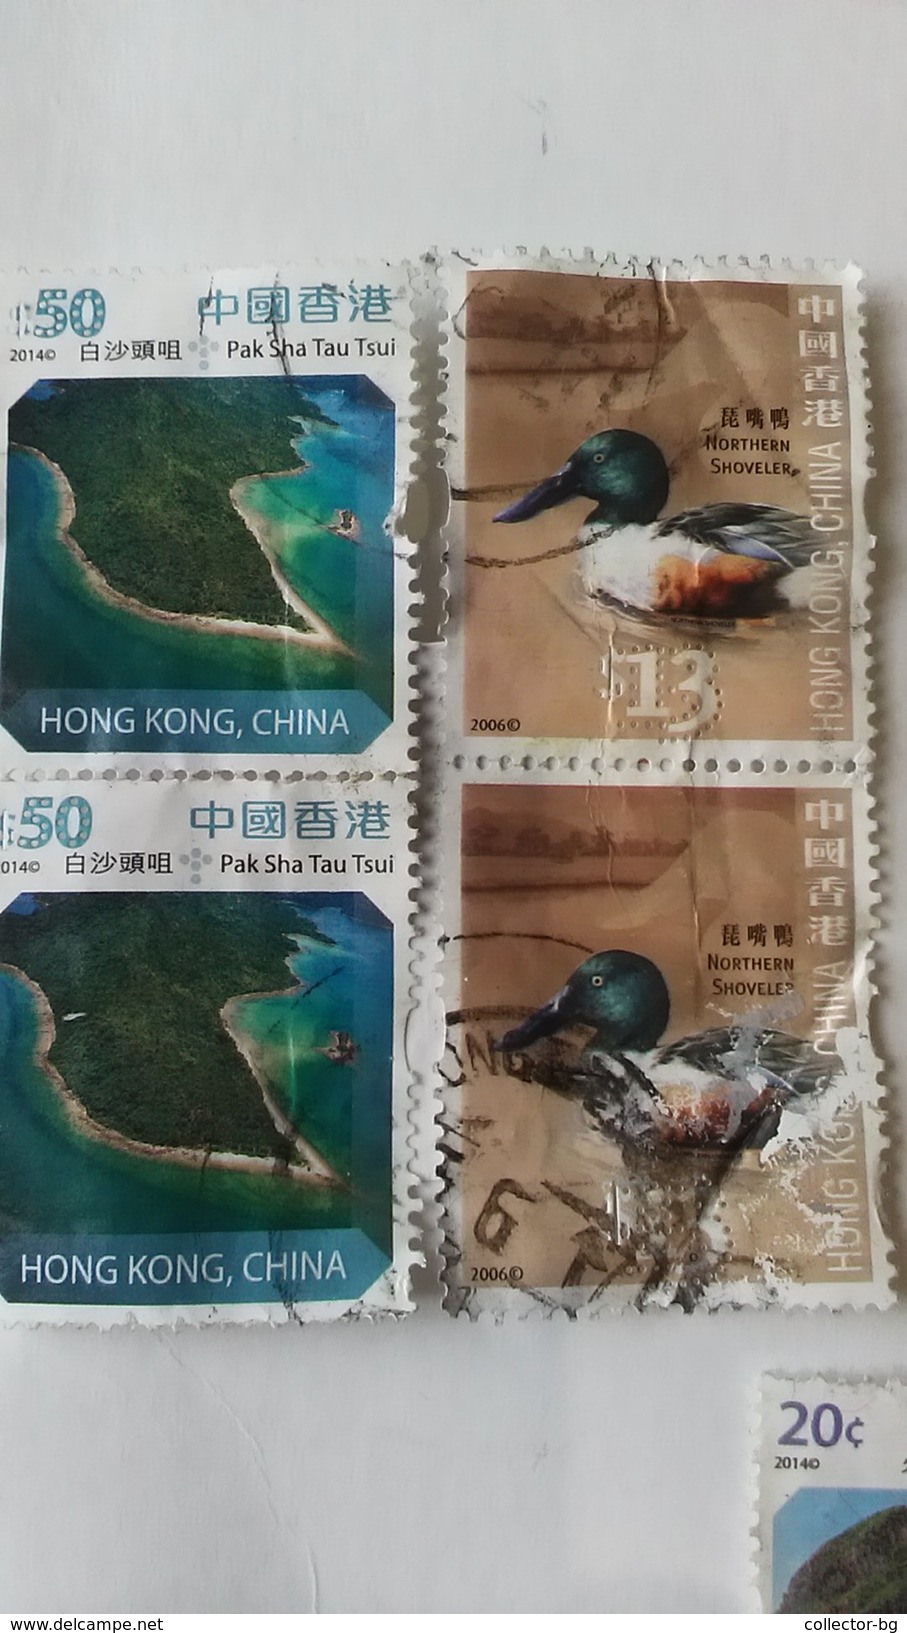 RARE PAIR 50$+13$+20C HONG KONG CHINA 2006-20014 USED TRAVEL BIG PARCEL RRR NORTH SHOVELER BASALT ISLAND STAMP TIMBRE - Used Stamps